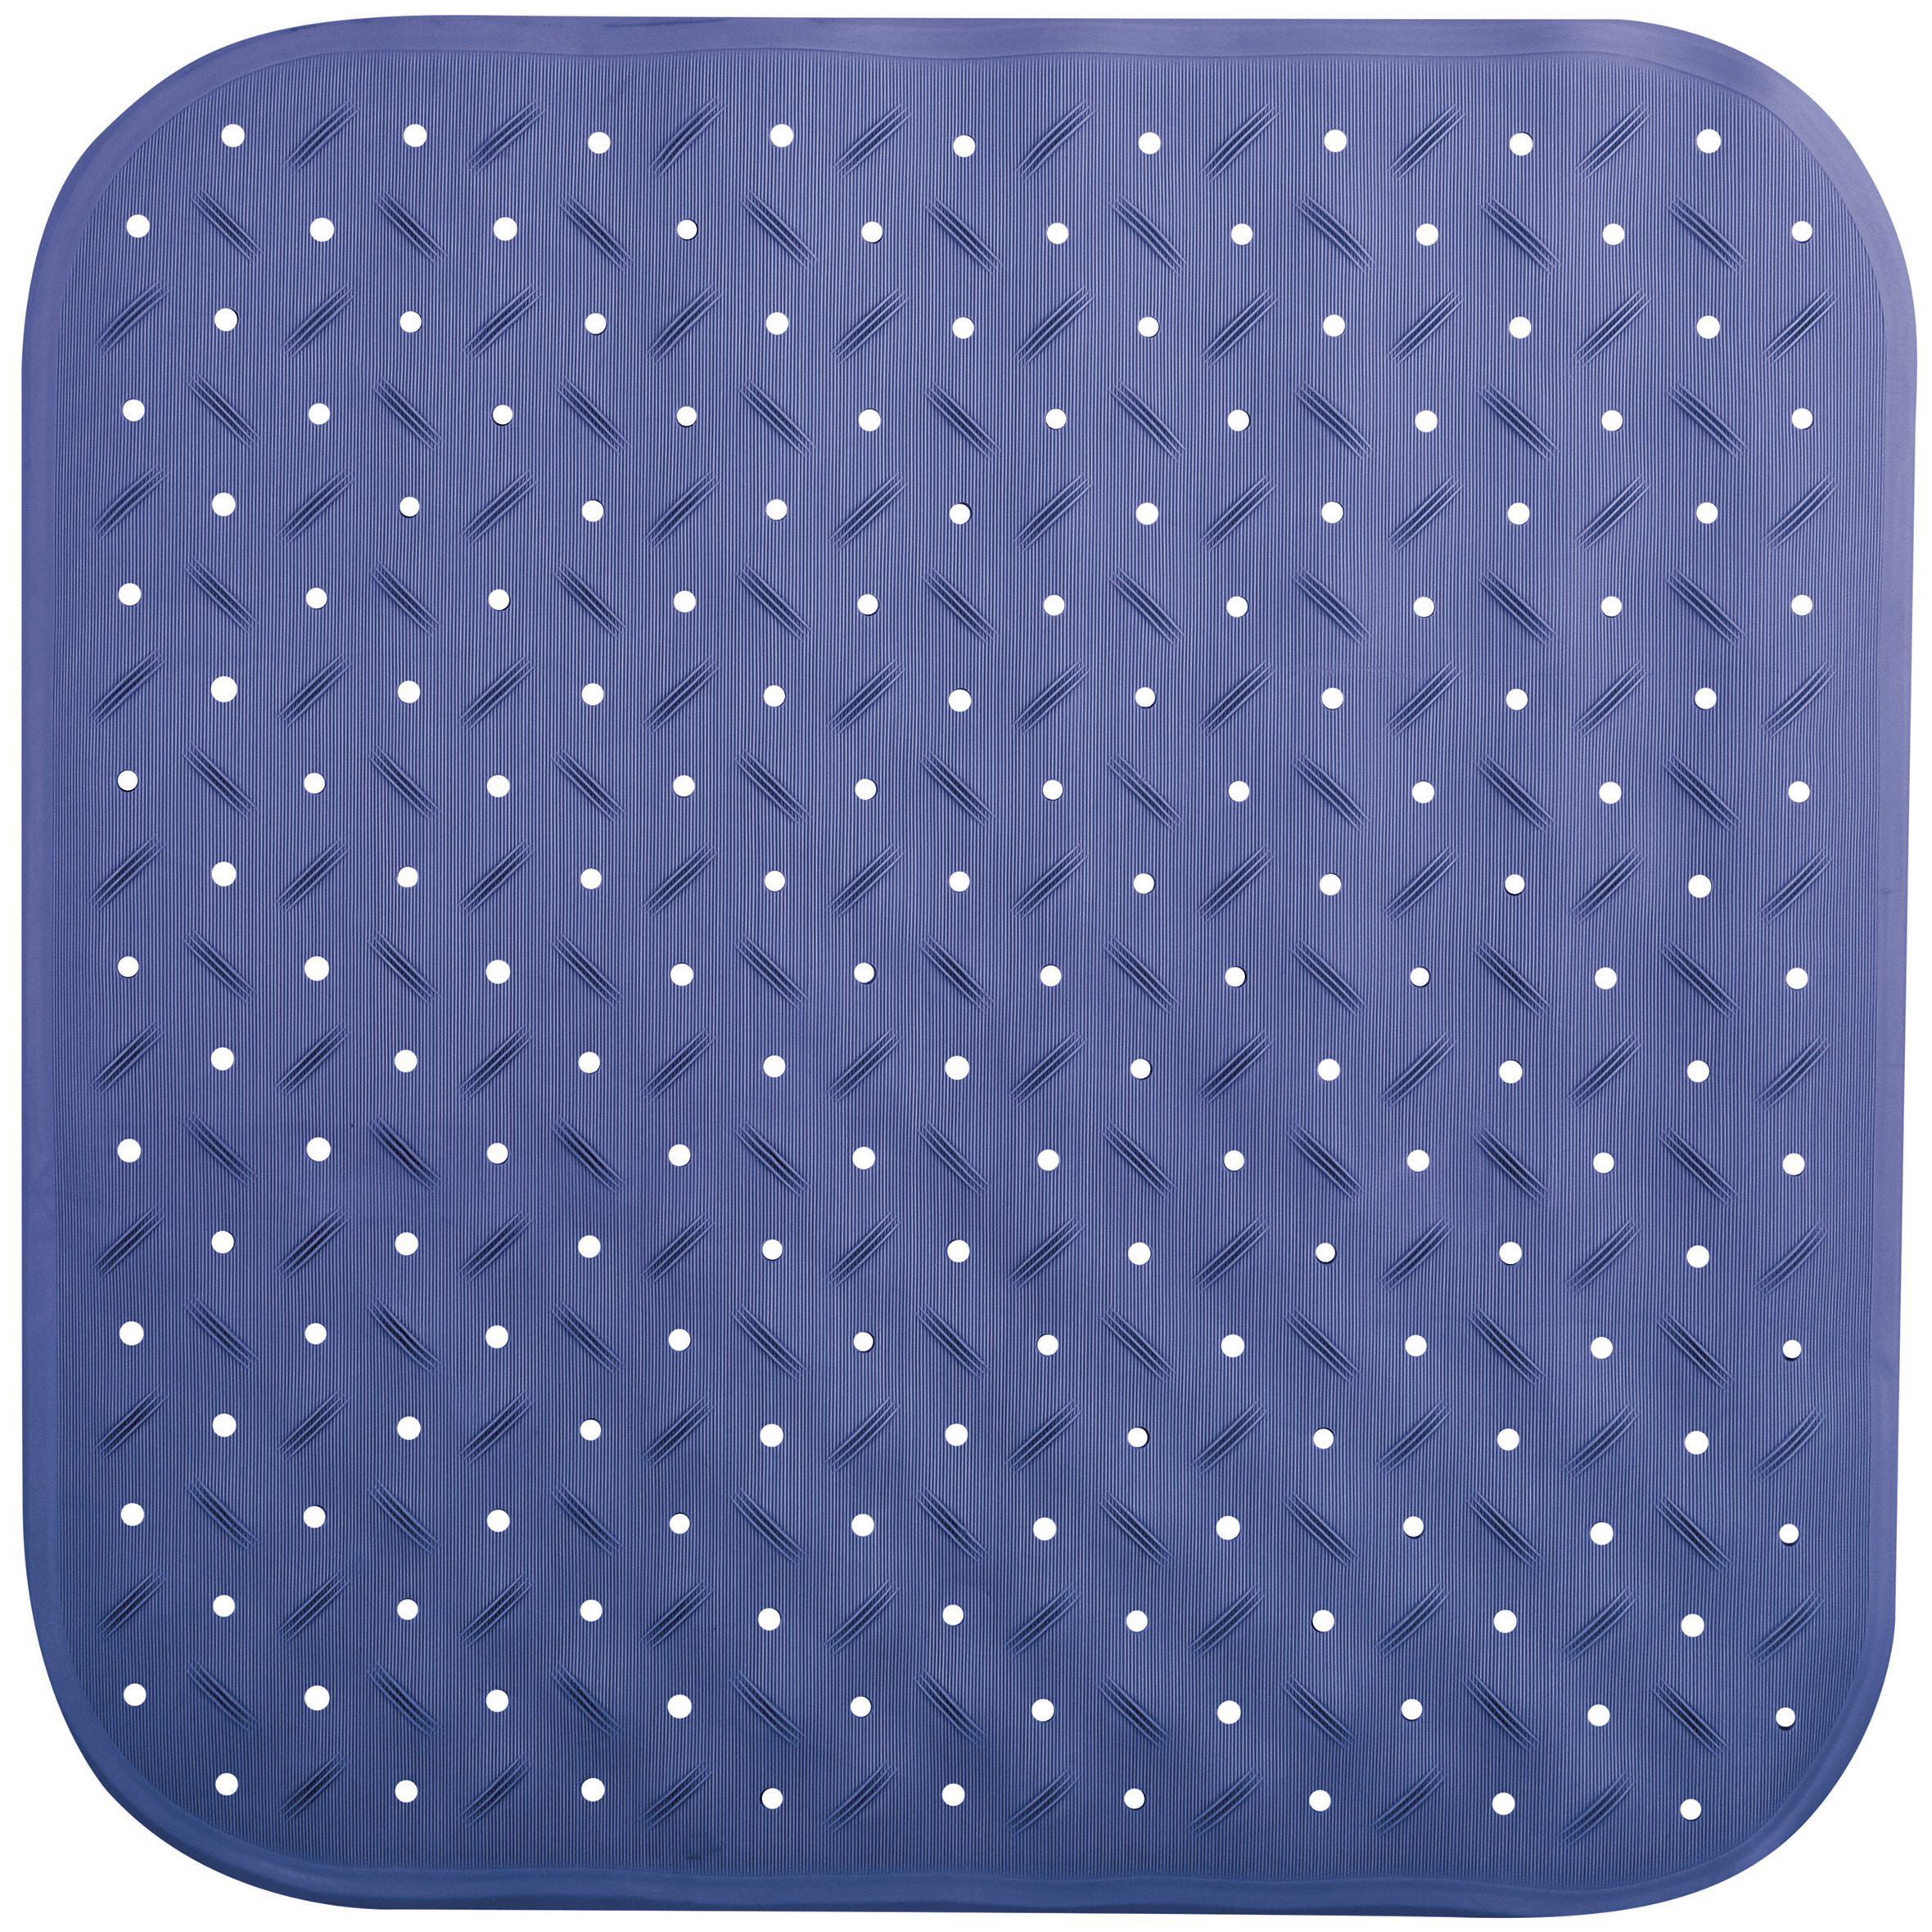 Douche-bad anti-slip mat badkamer rubber blauw 54 x 54 cm vierkant